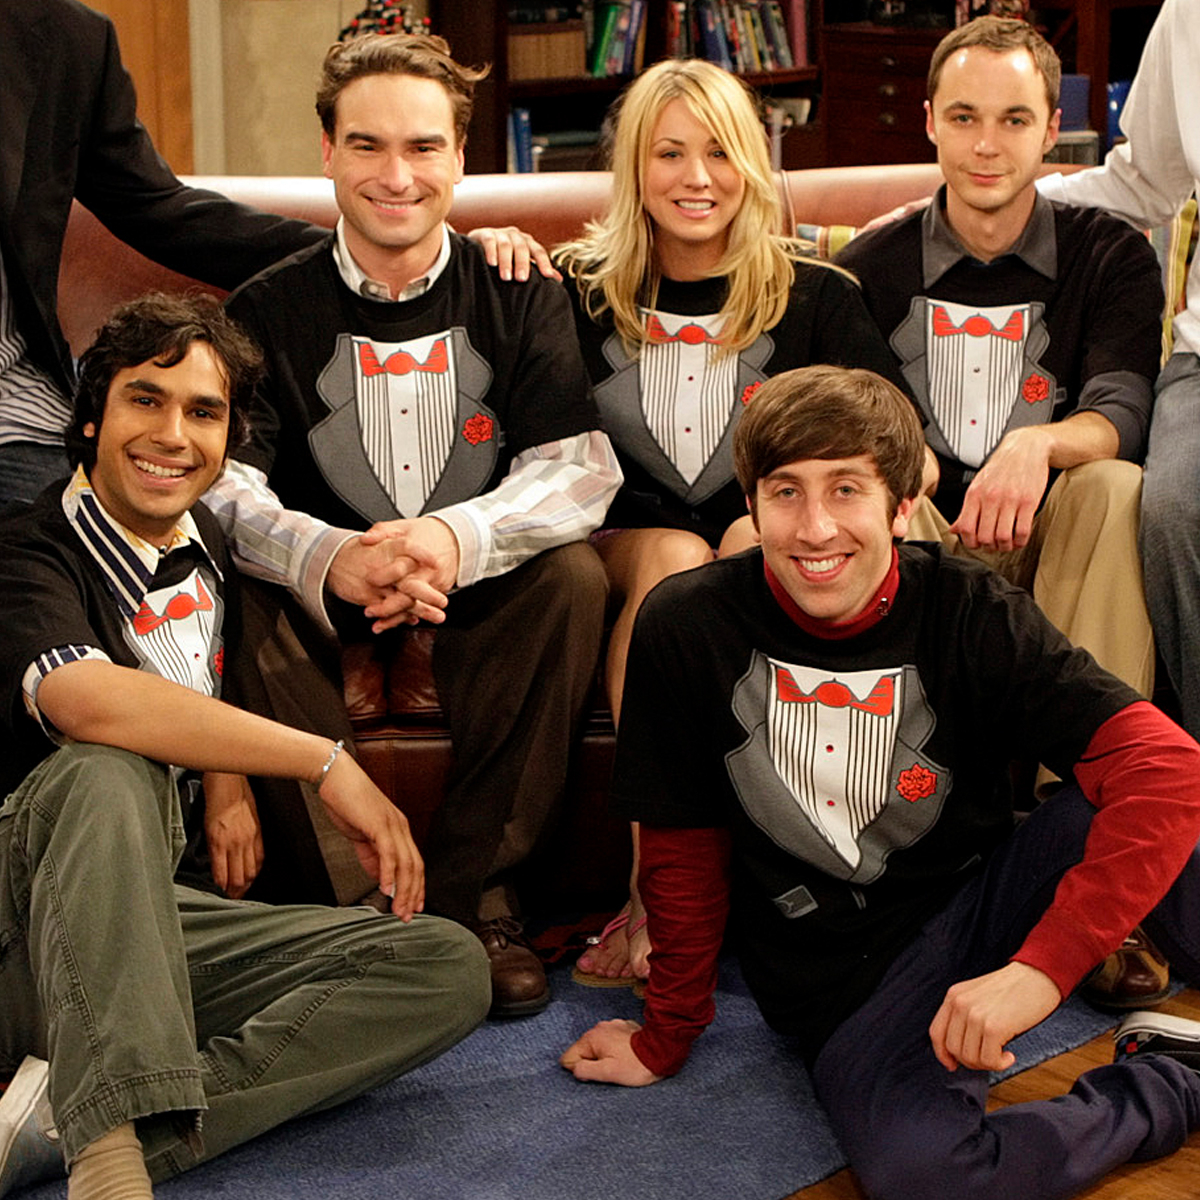 Bazinga! CBS comedy 'Young Sheldon' is making a 'Big Bang' of its own